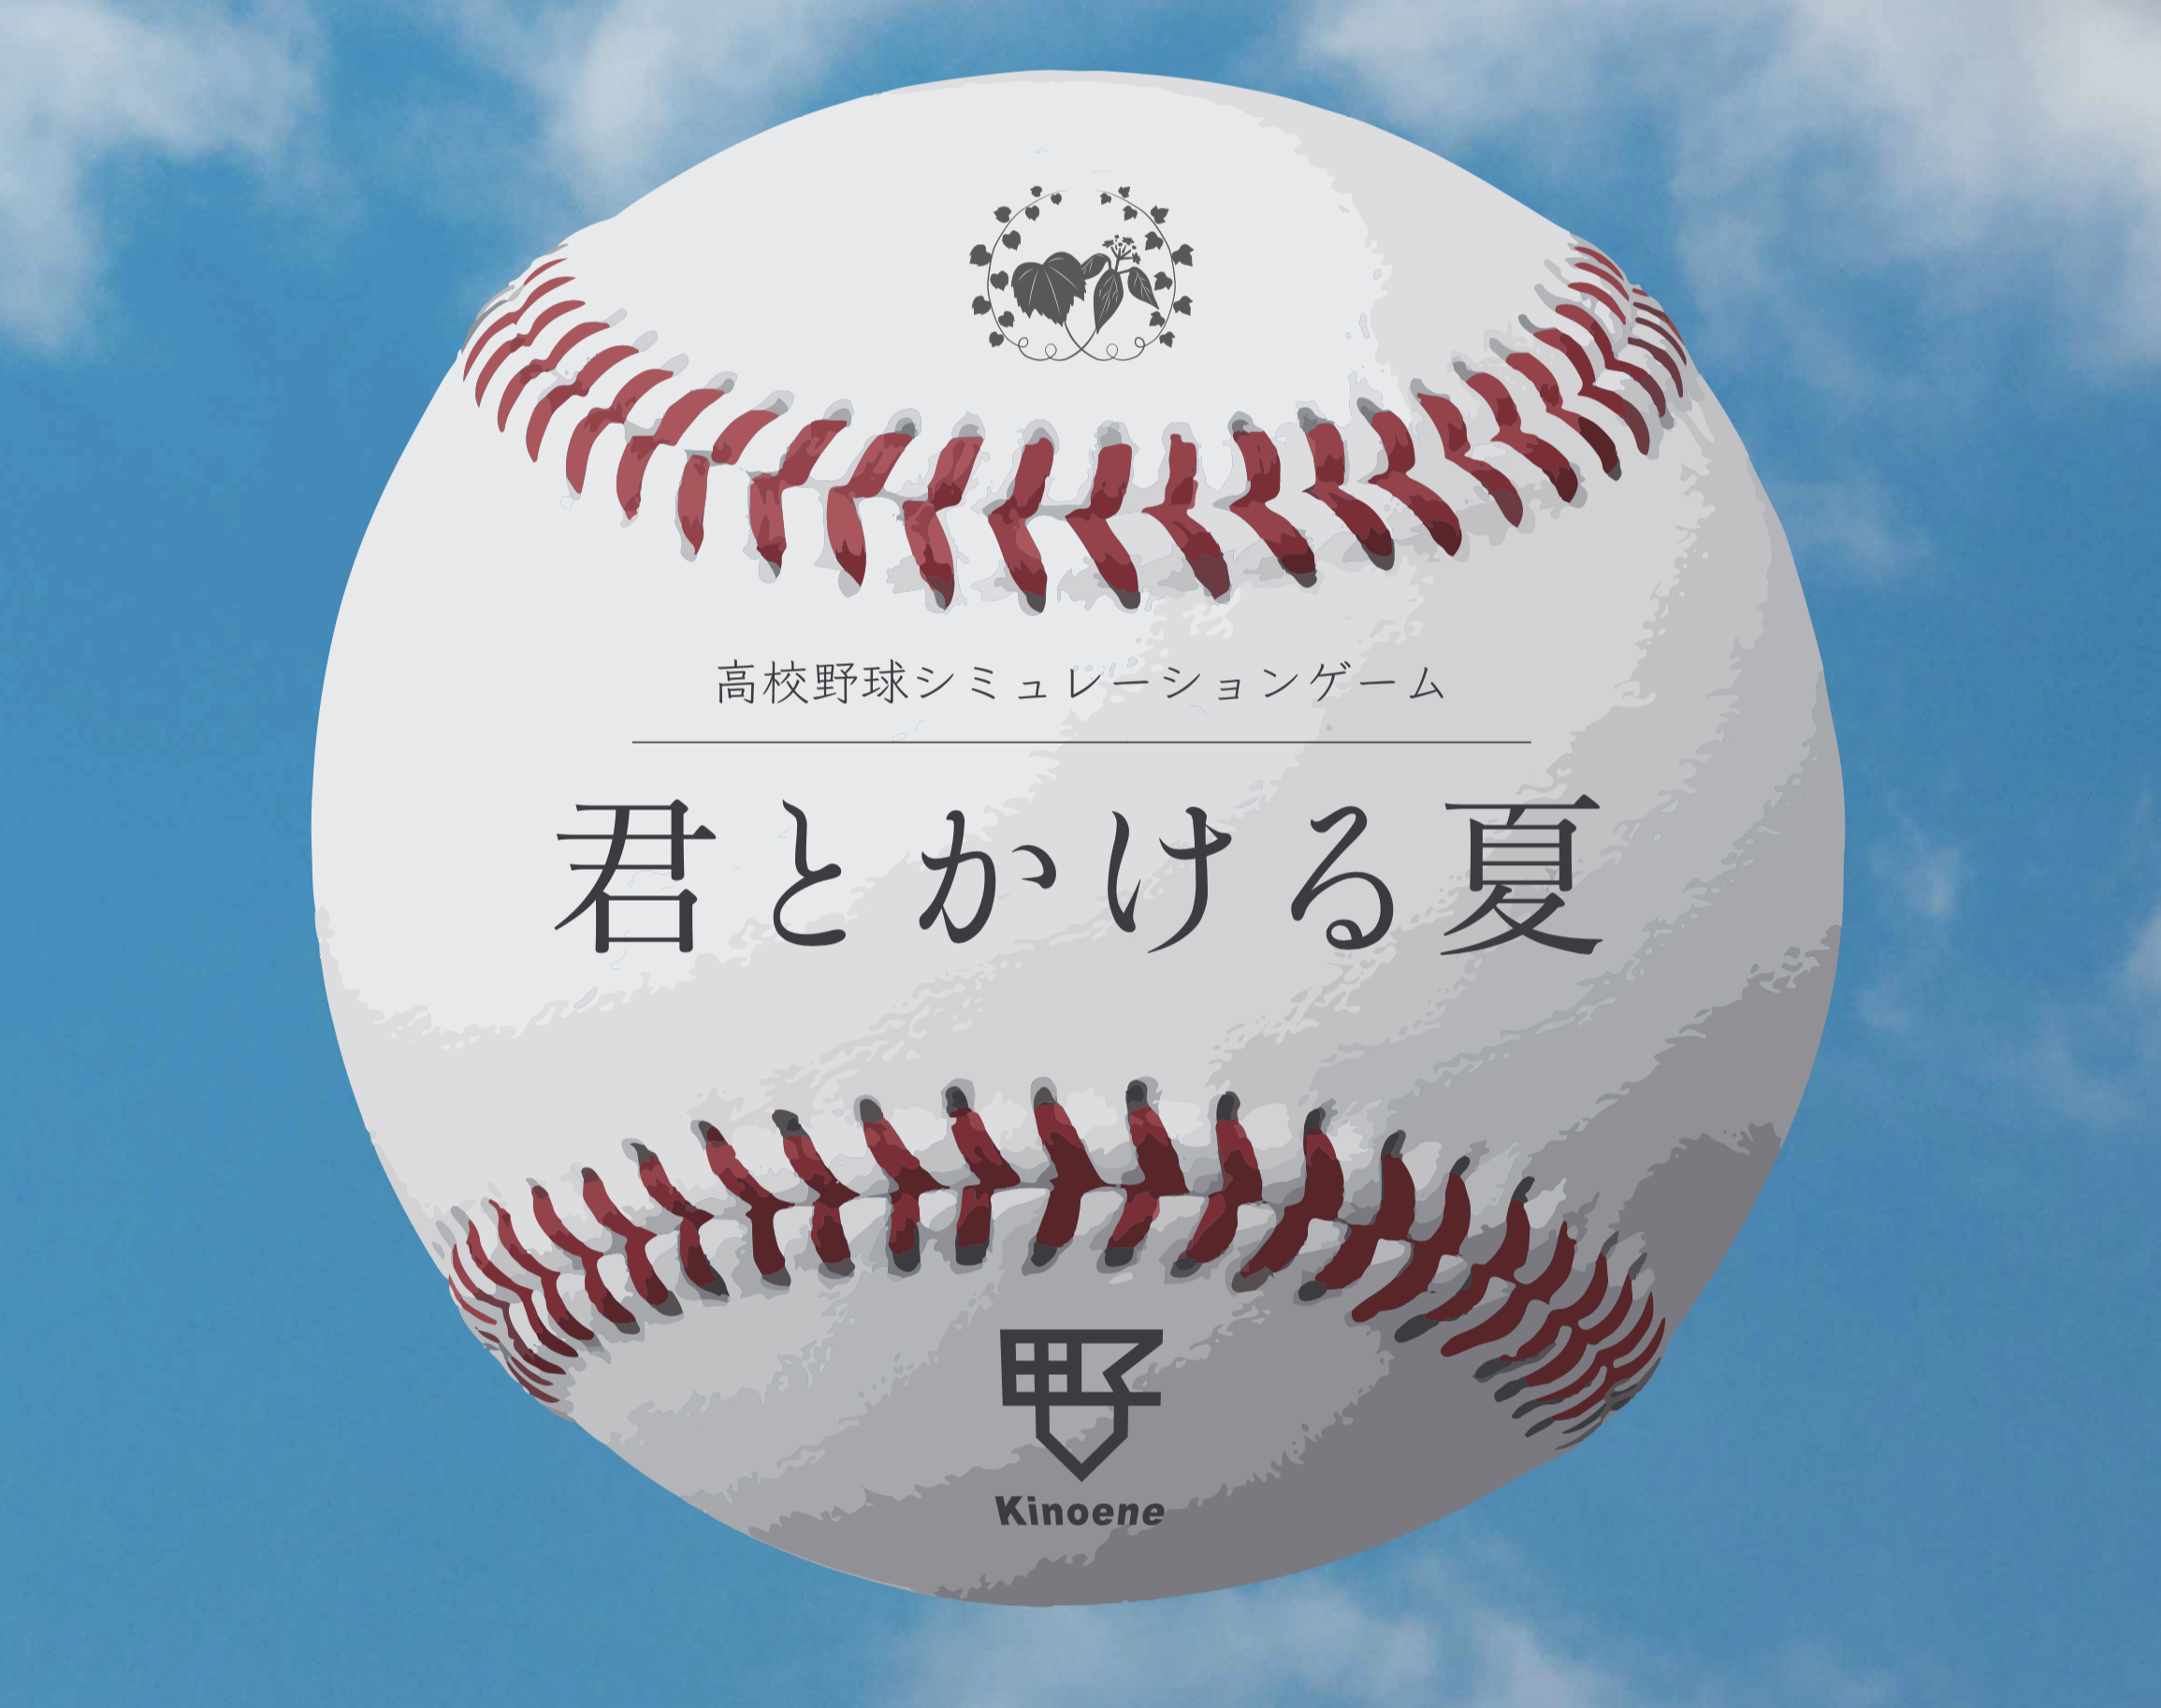 Kinoene 高校野球ゲーム制作サークル Kinoene きのえね のwebサイトです